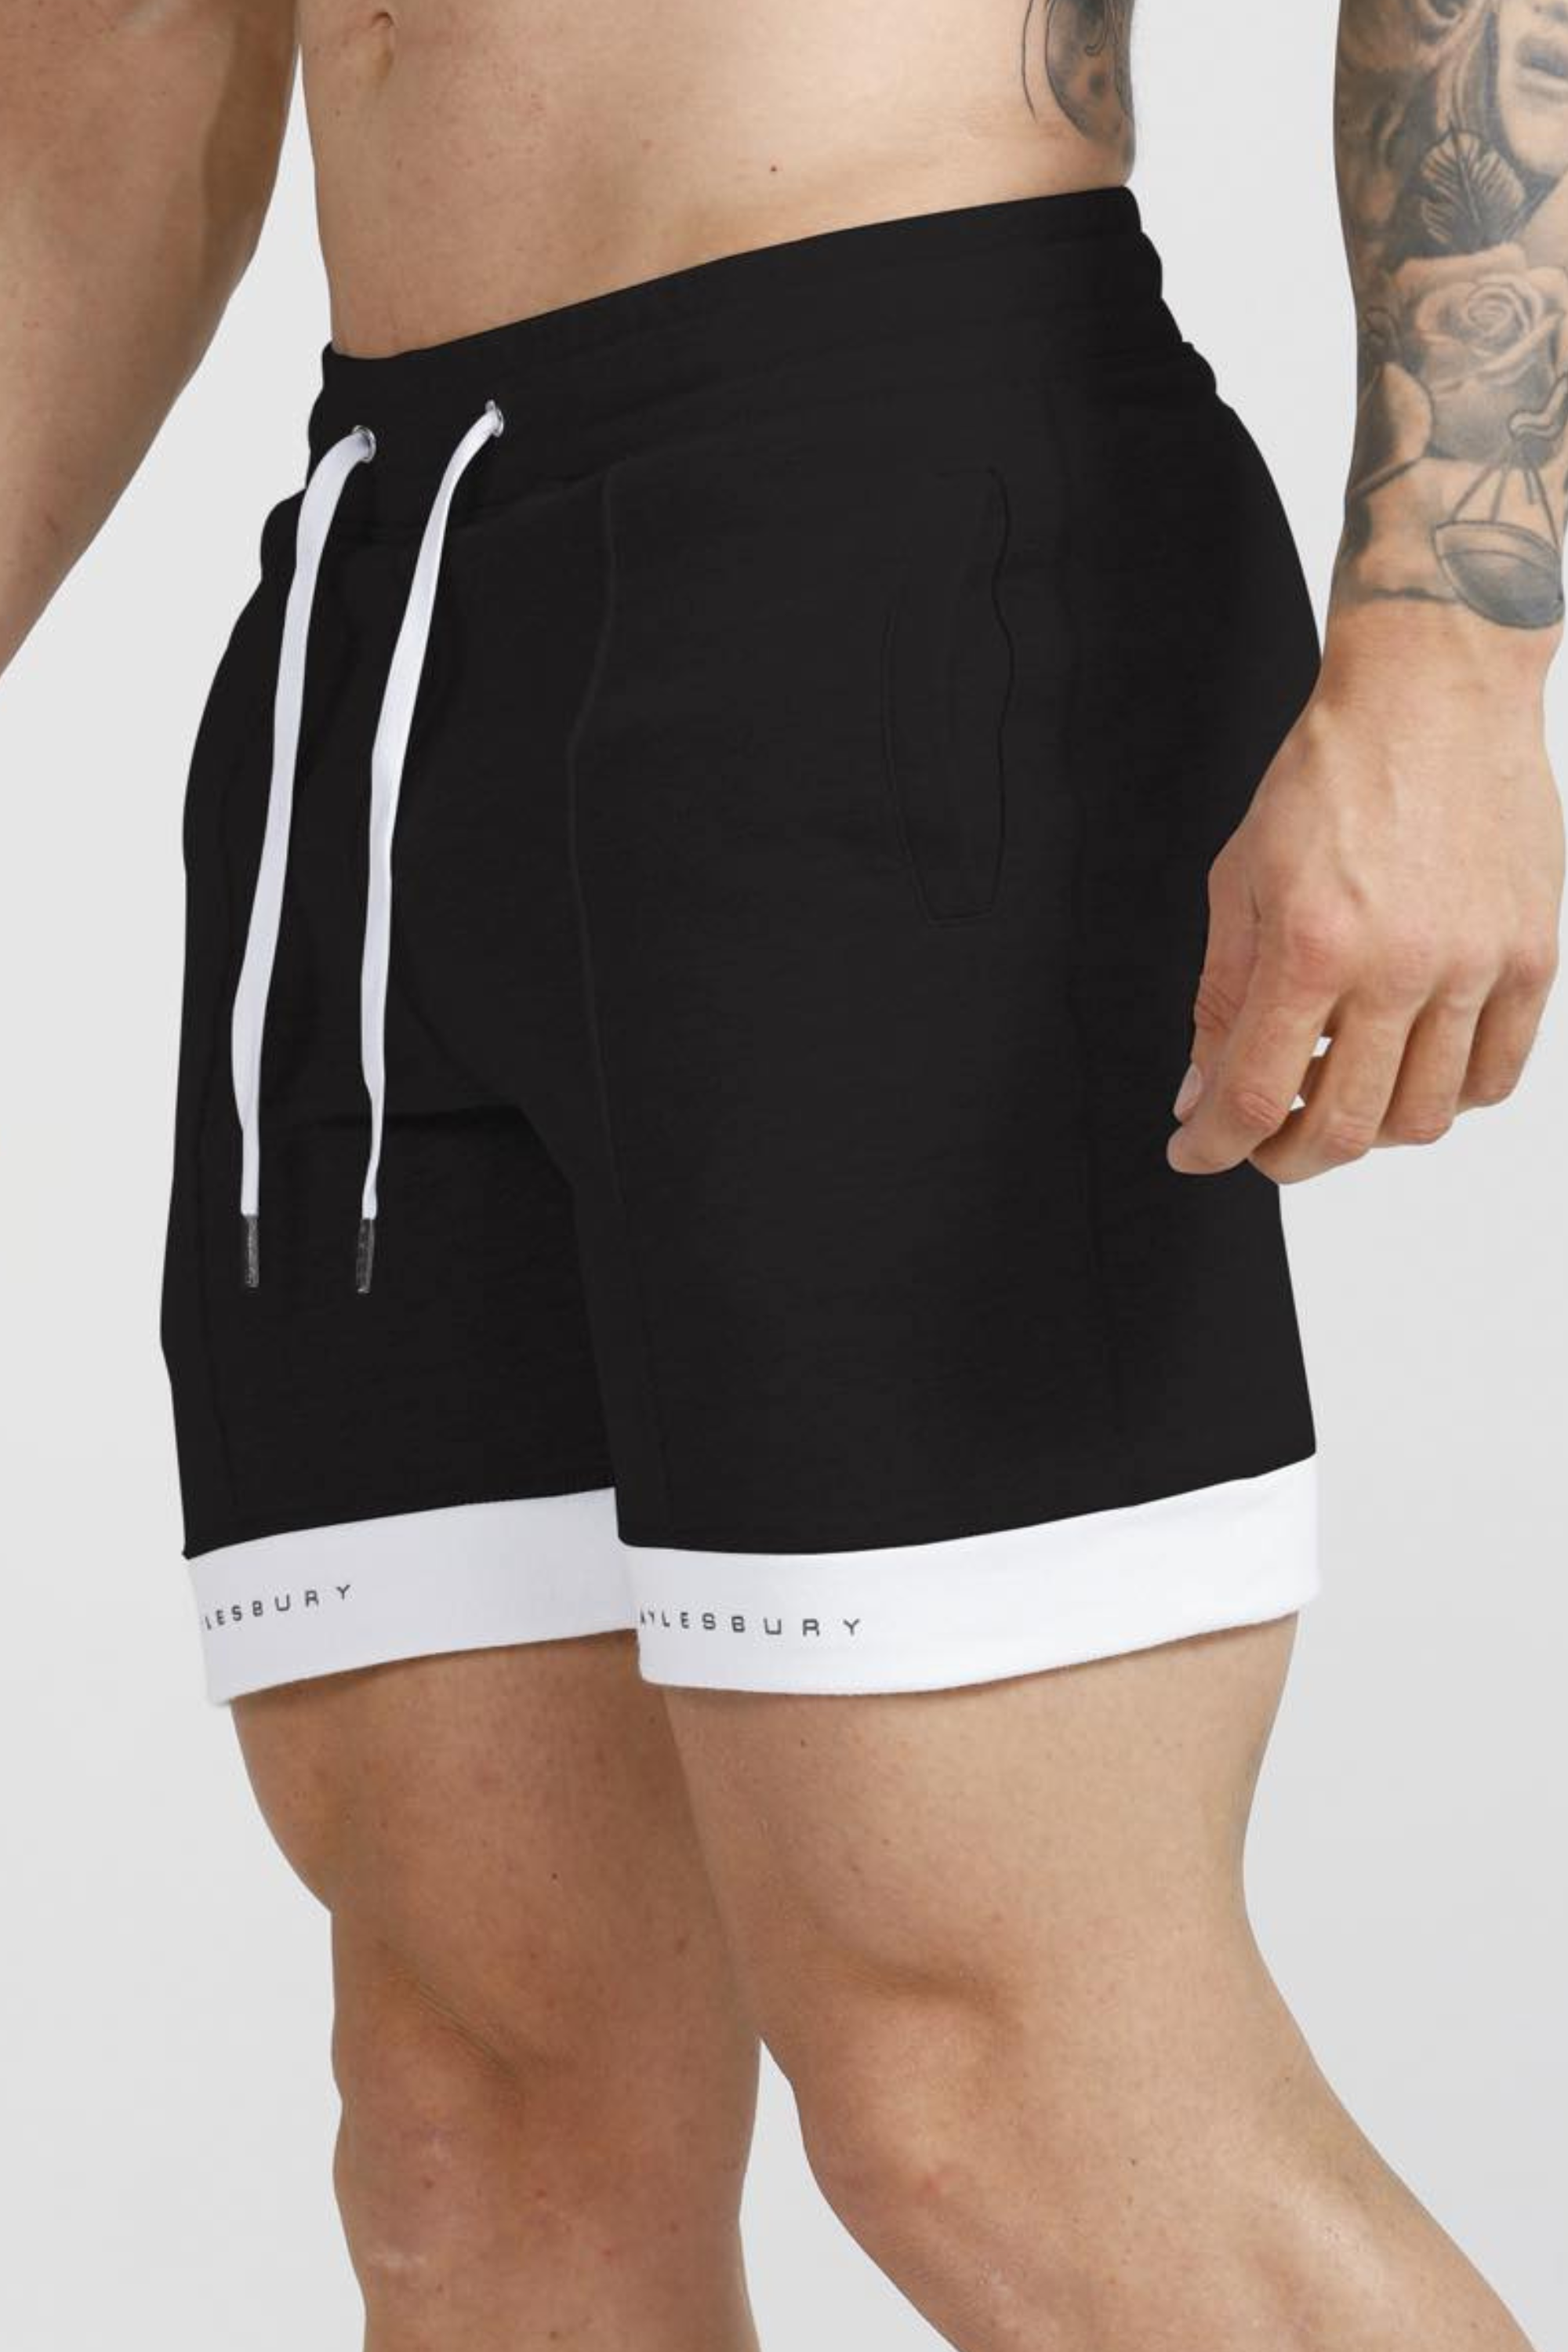 Contrast Shorts - Black